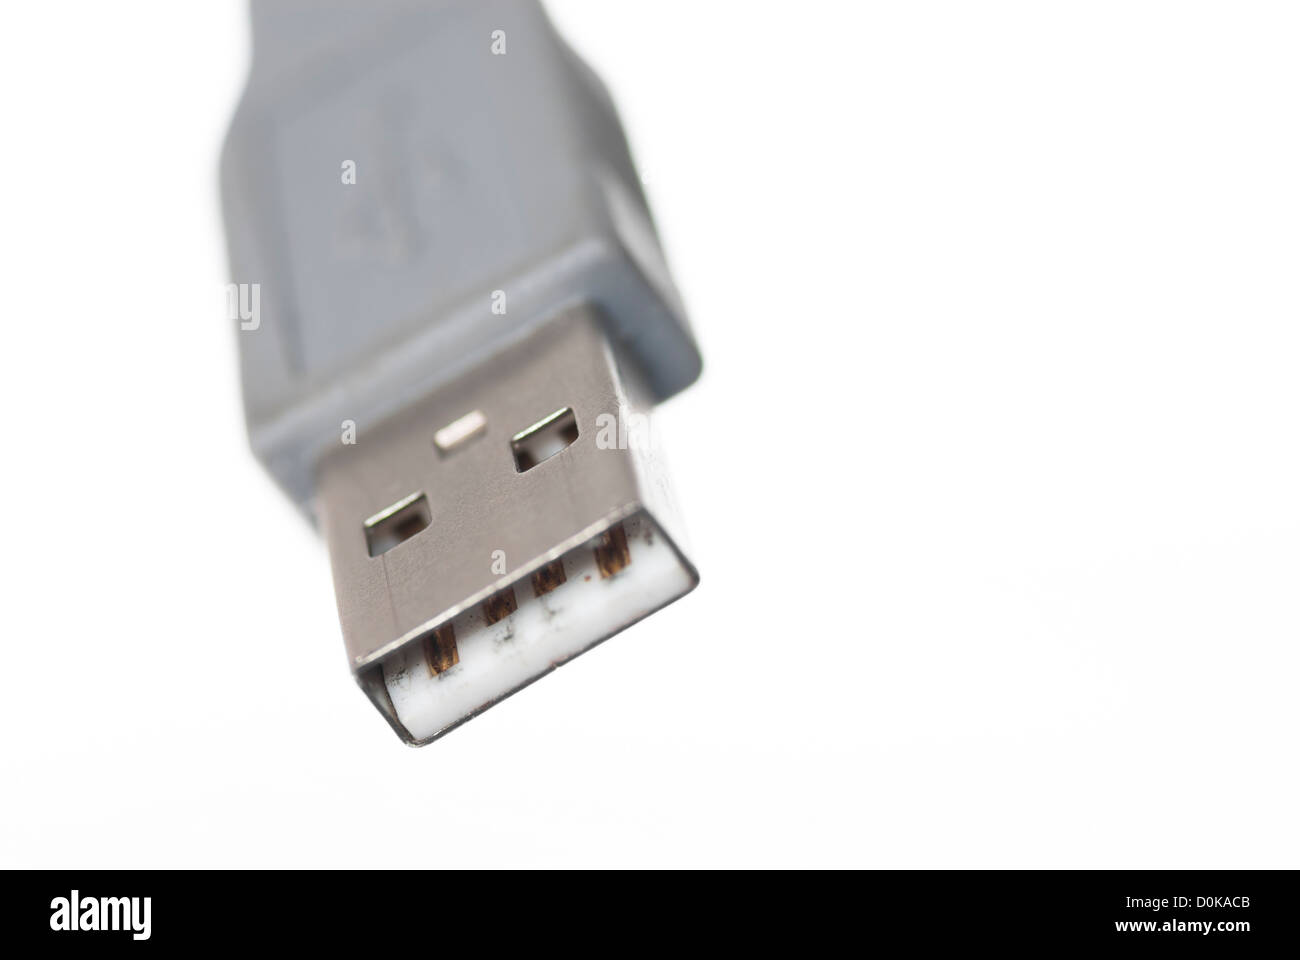 Cable USB AB Male/Male 15' (Imprimante) - Micro Data BR En Ligne